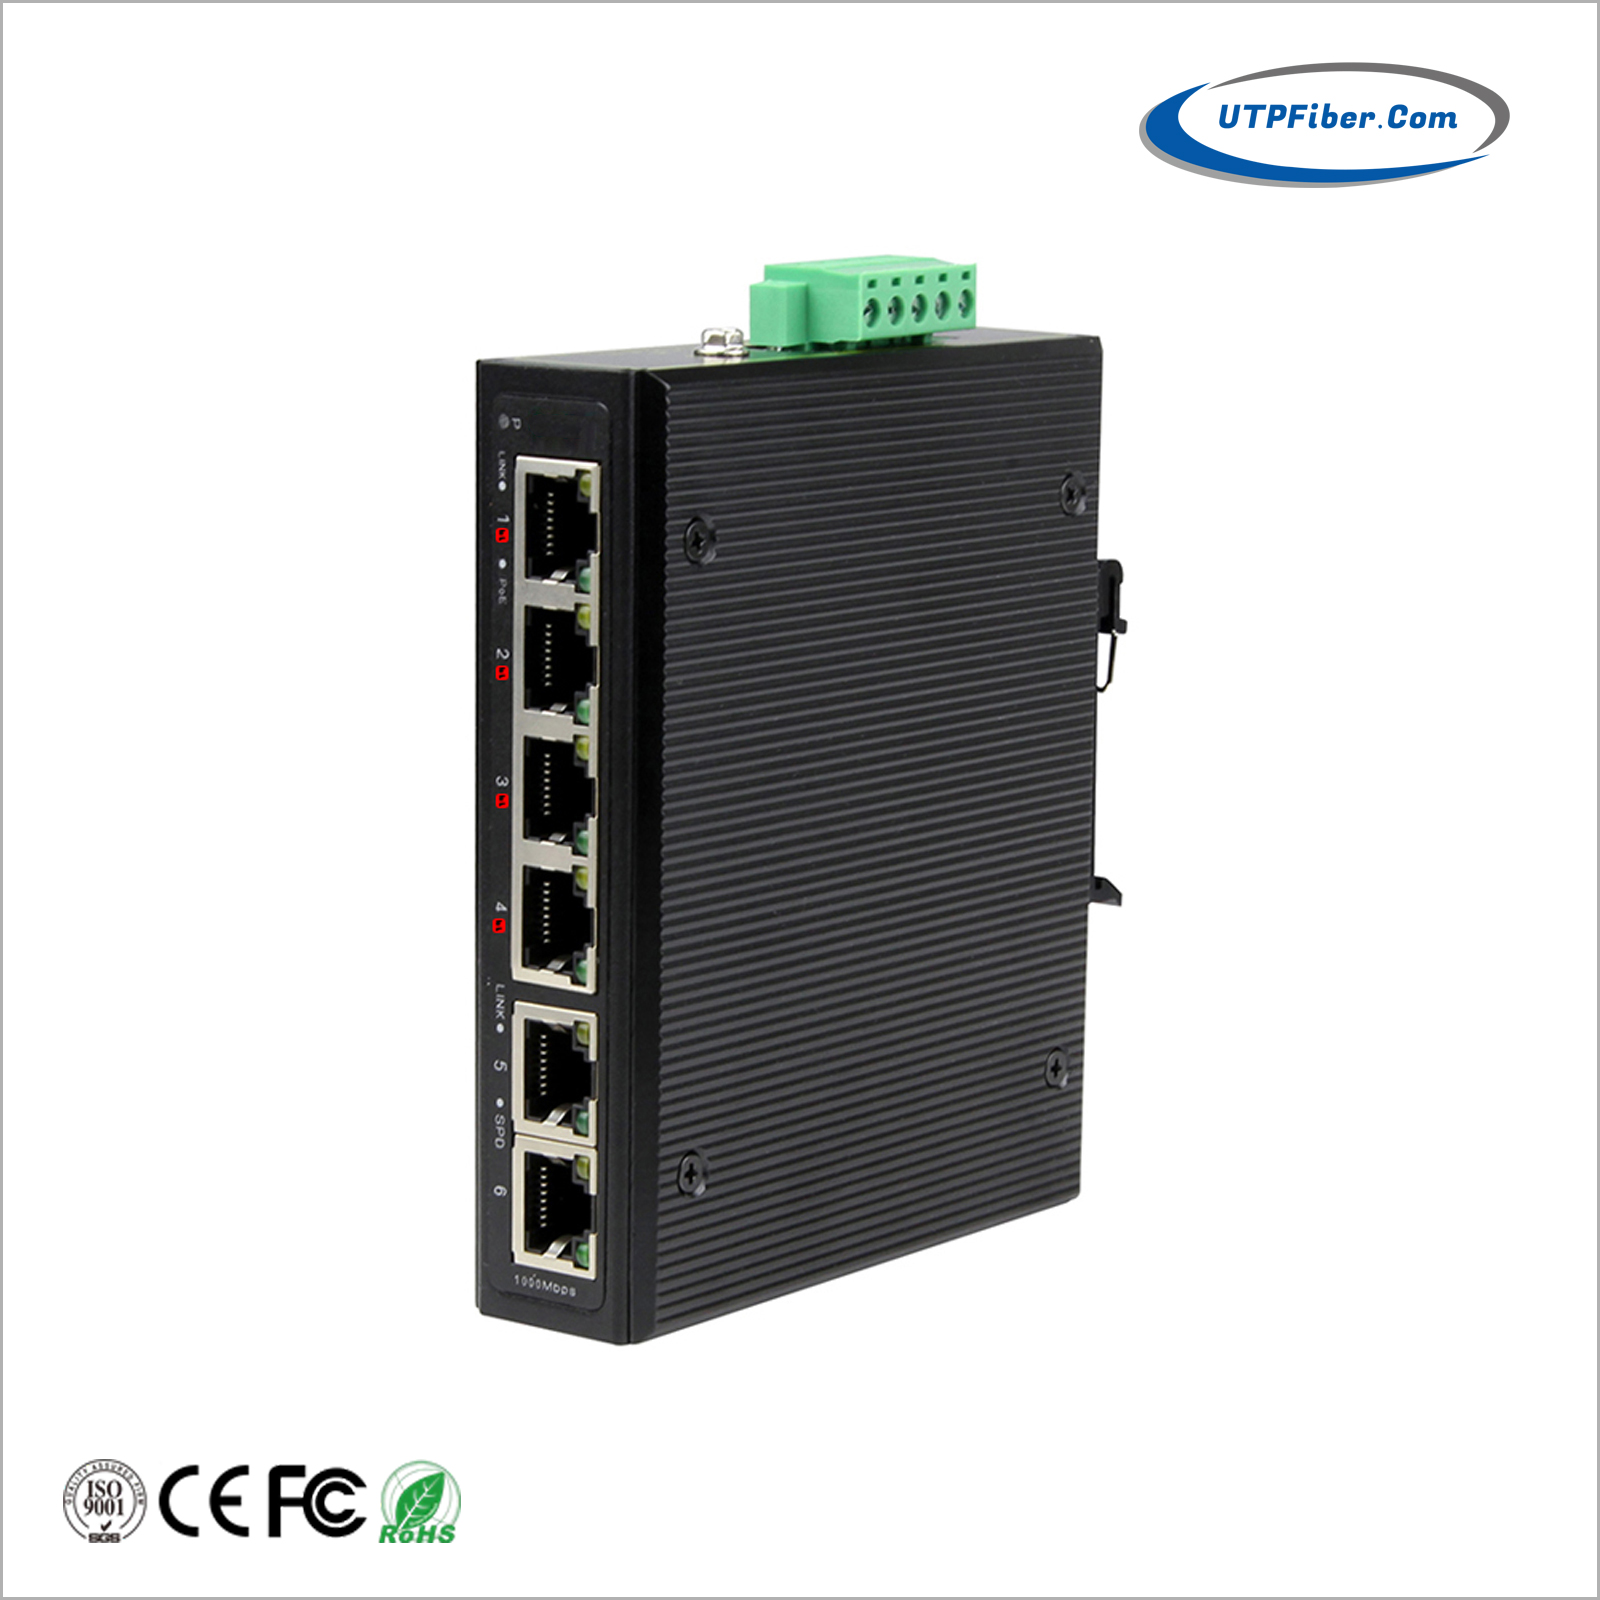 Industrial 4-Port 10/100/1000T 802.3bt PoE + 2-Port 10/100/1000T Gigabit Ethernet Switch